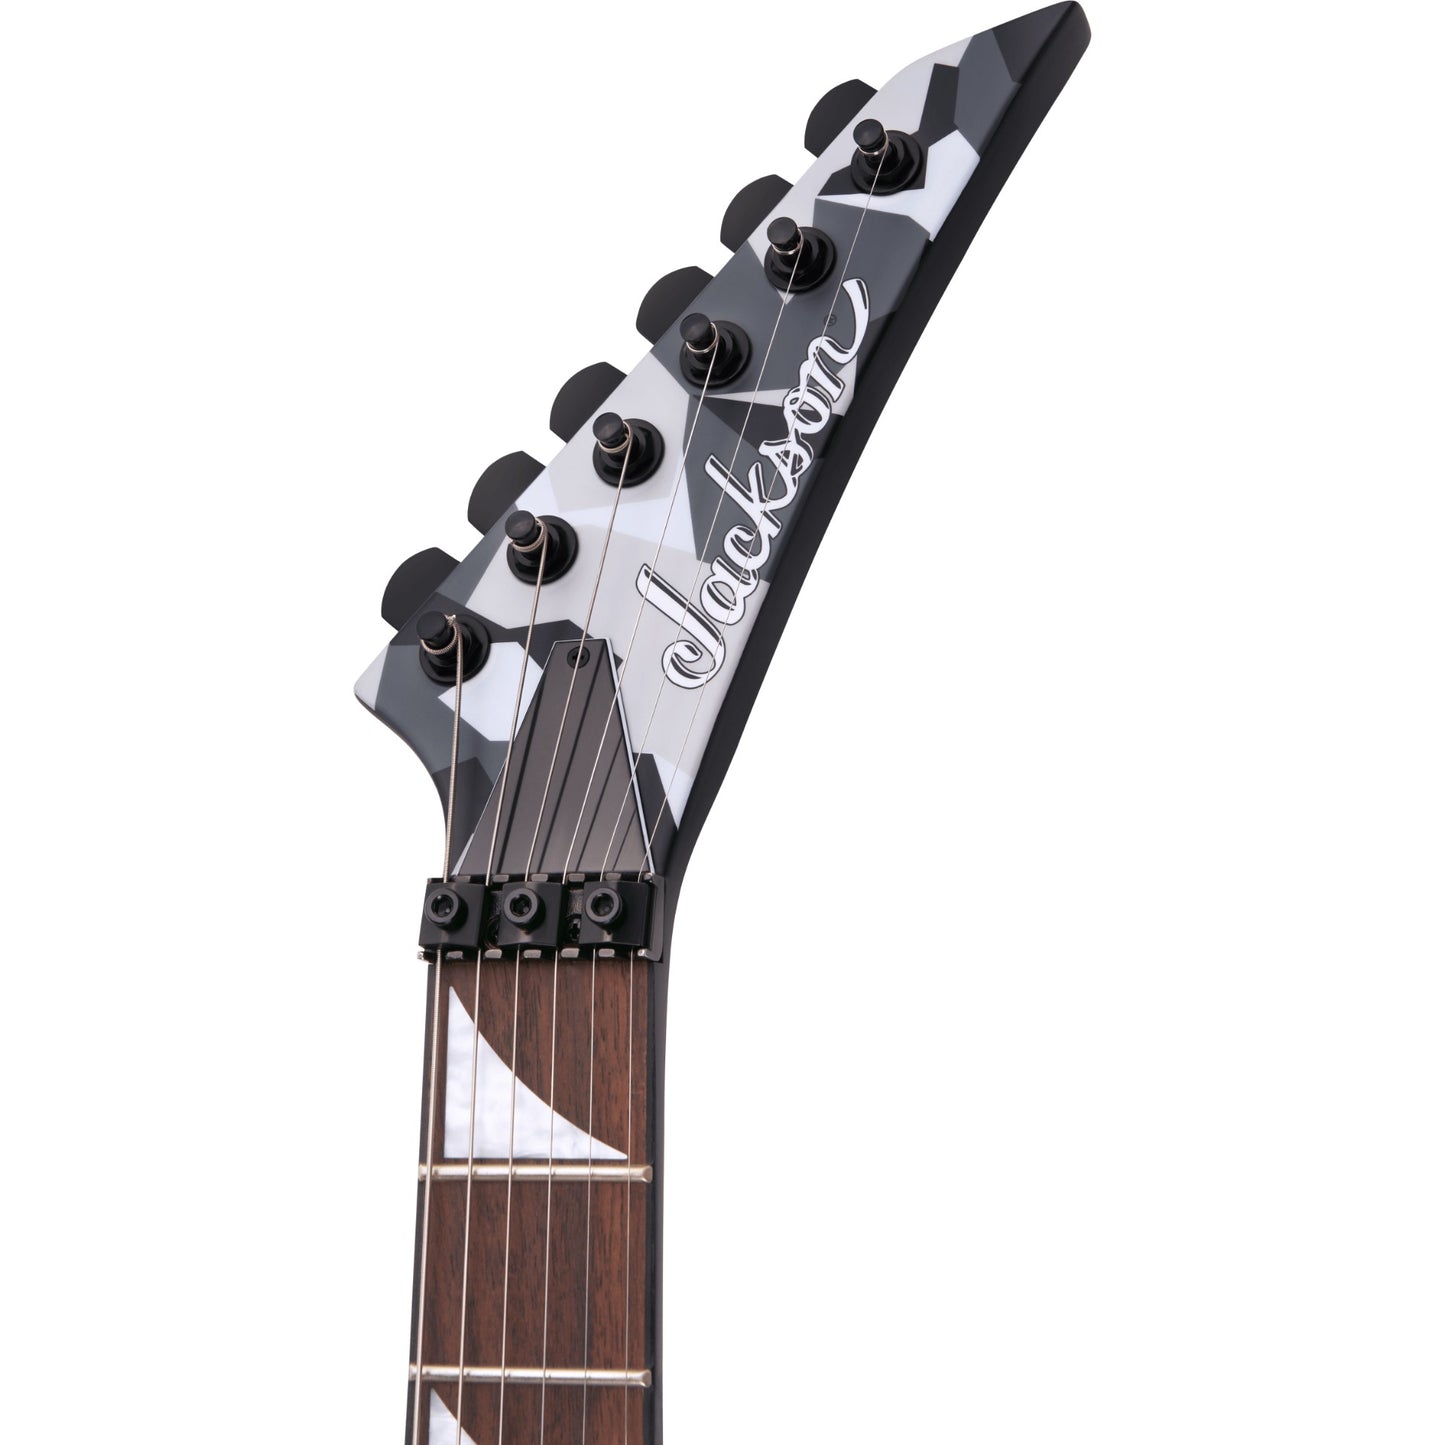 Jackson X Series Soloist™ SLX DX Camo Electric Guitar, Winter Camo